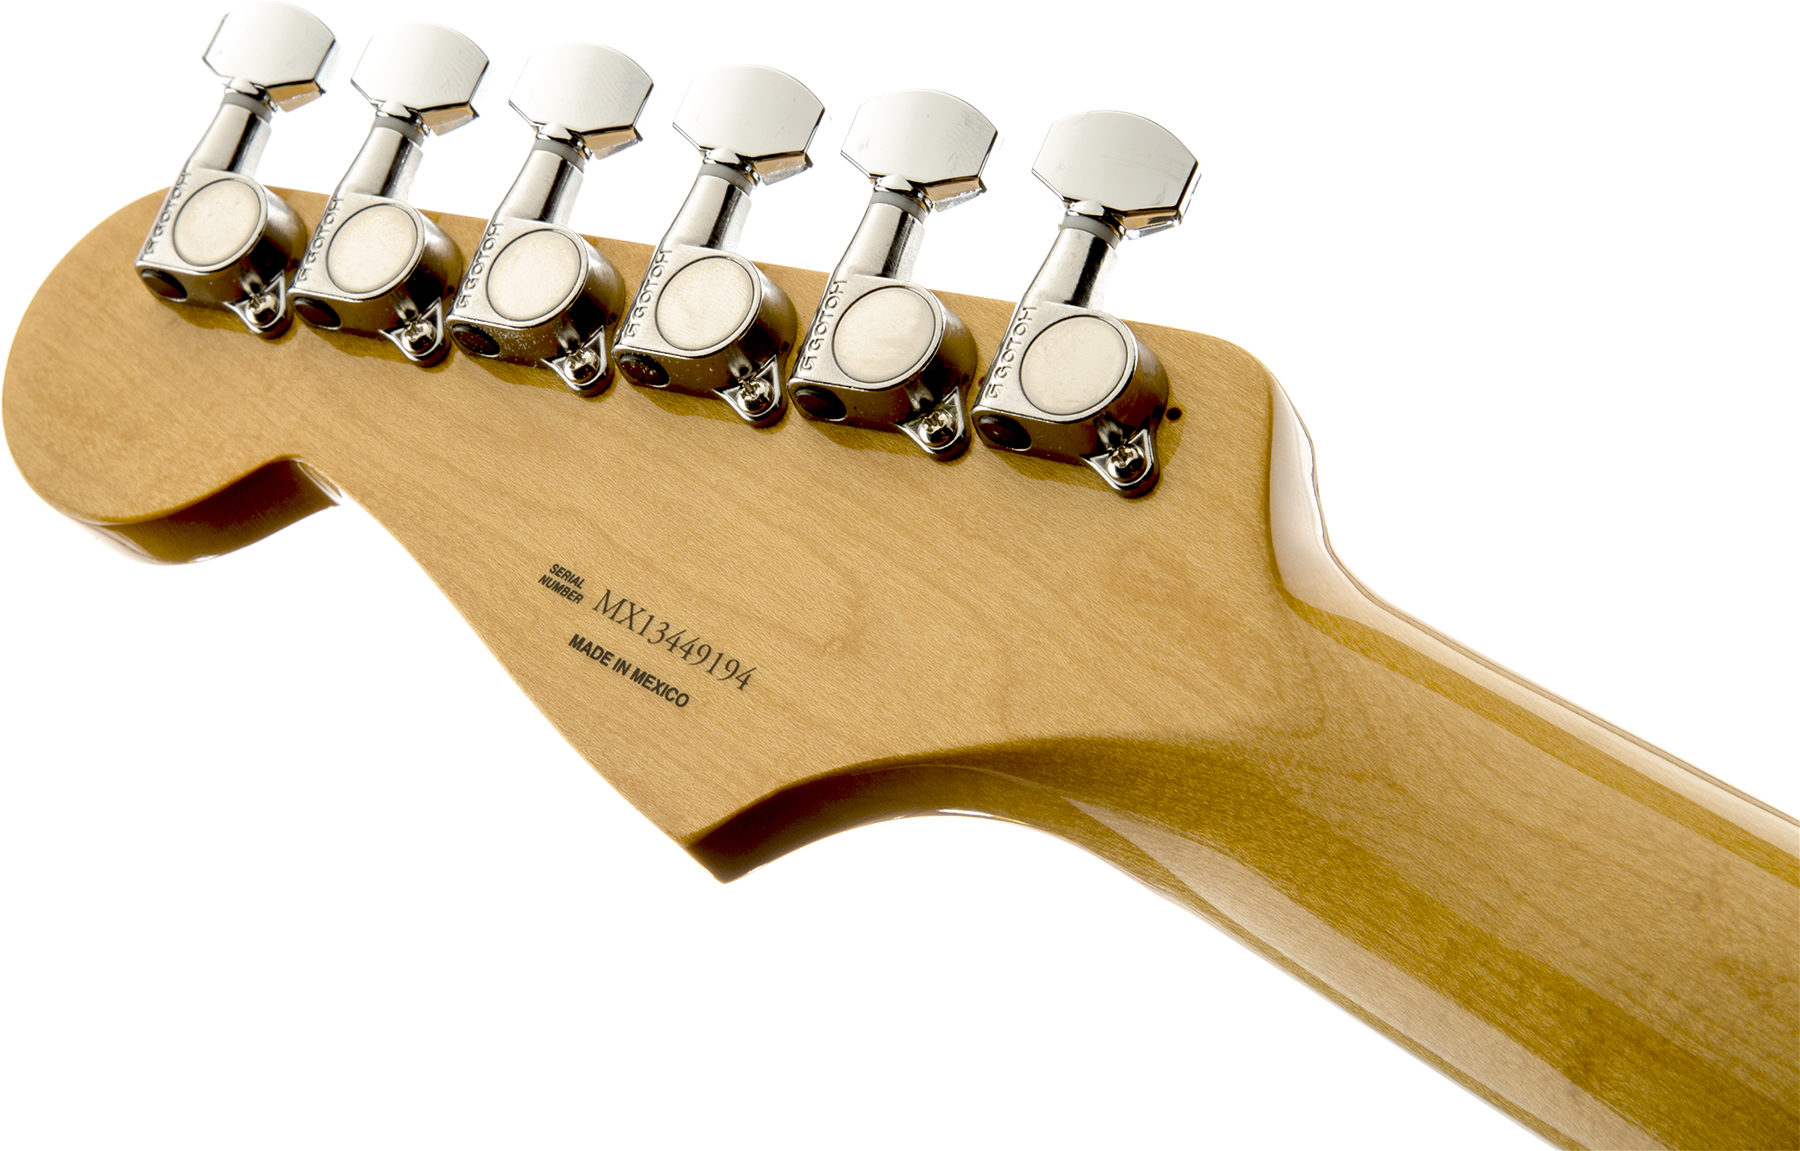 Fender Kurt Cobain Jaguar Mex Hh Trem Rw - 3-color Sunburst - Retro rock electric guitar - Variation 3